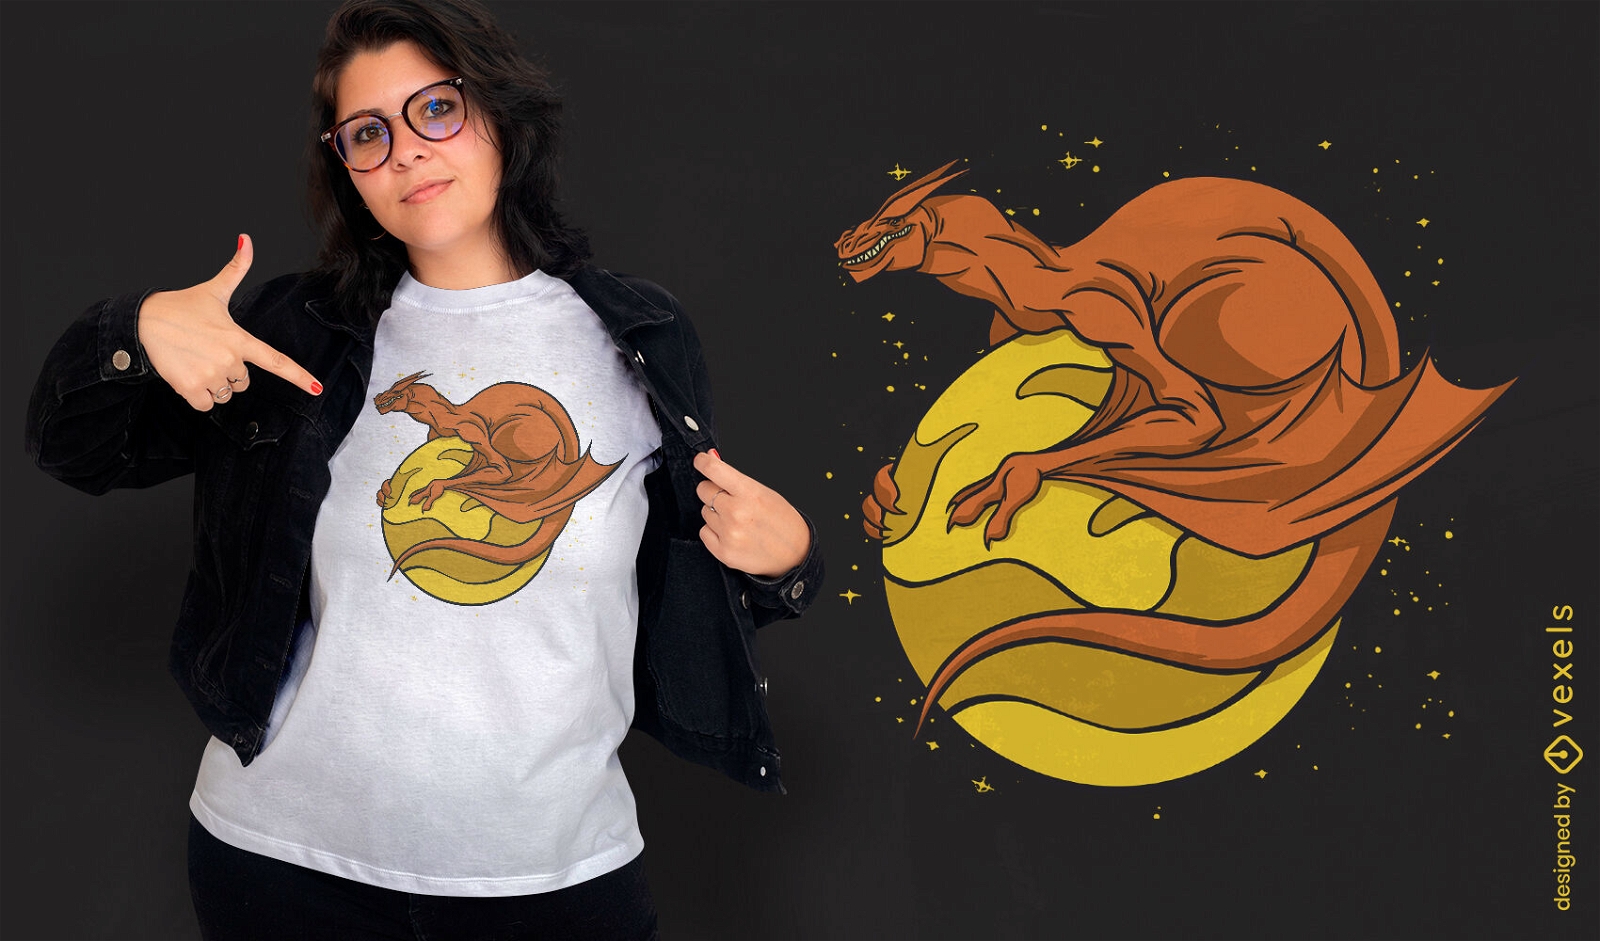 Space dragon t-shirt design